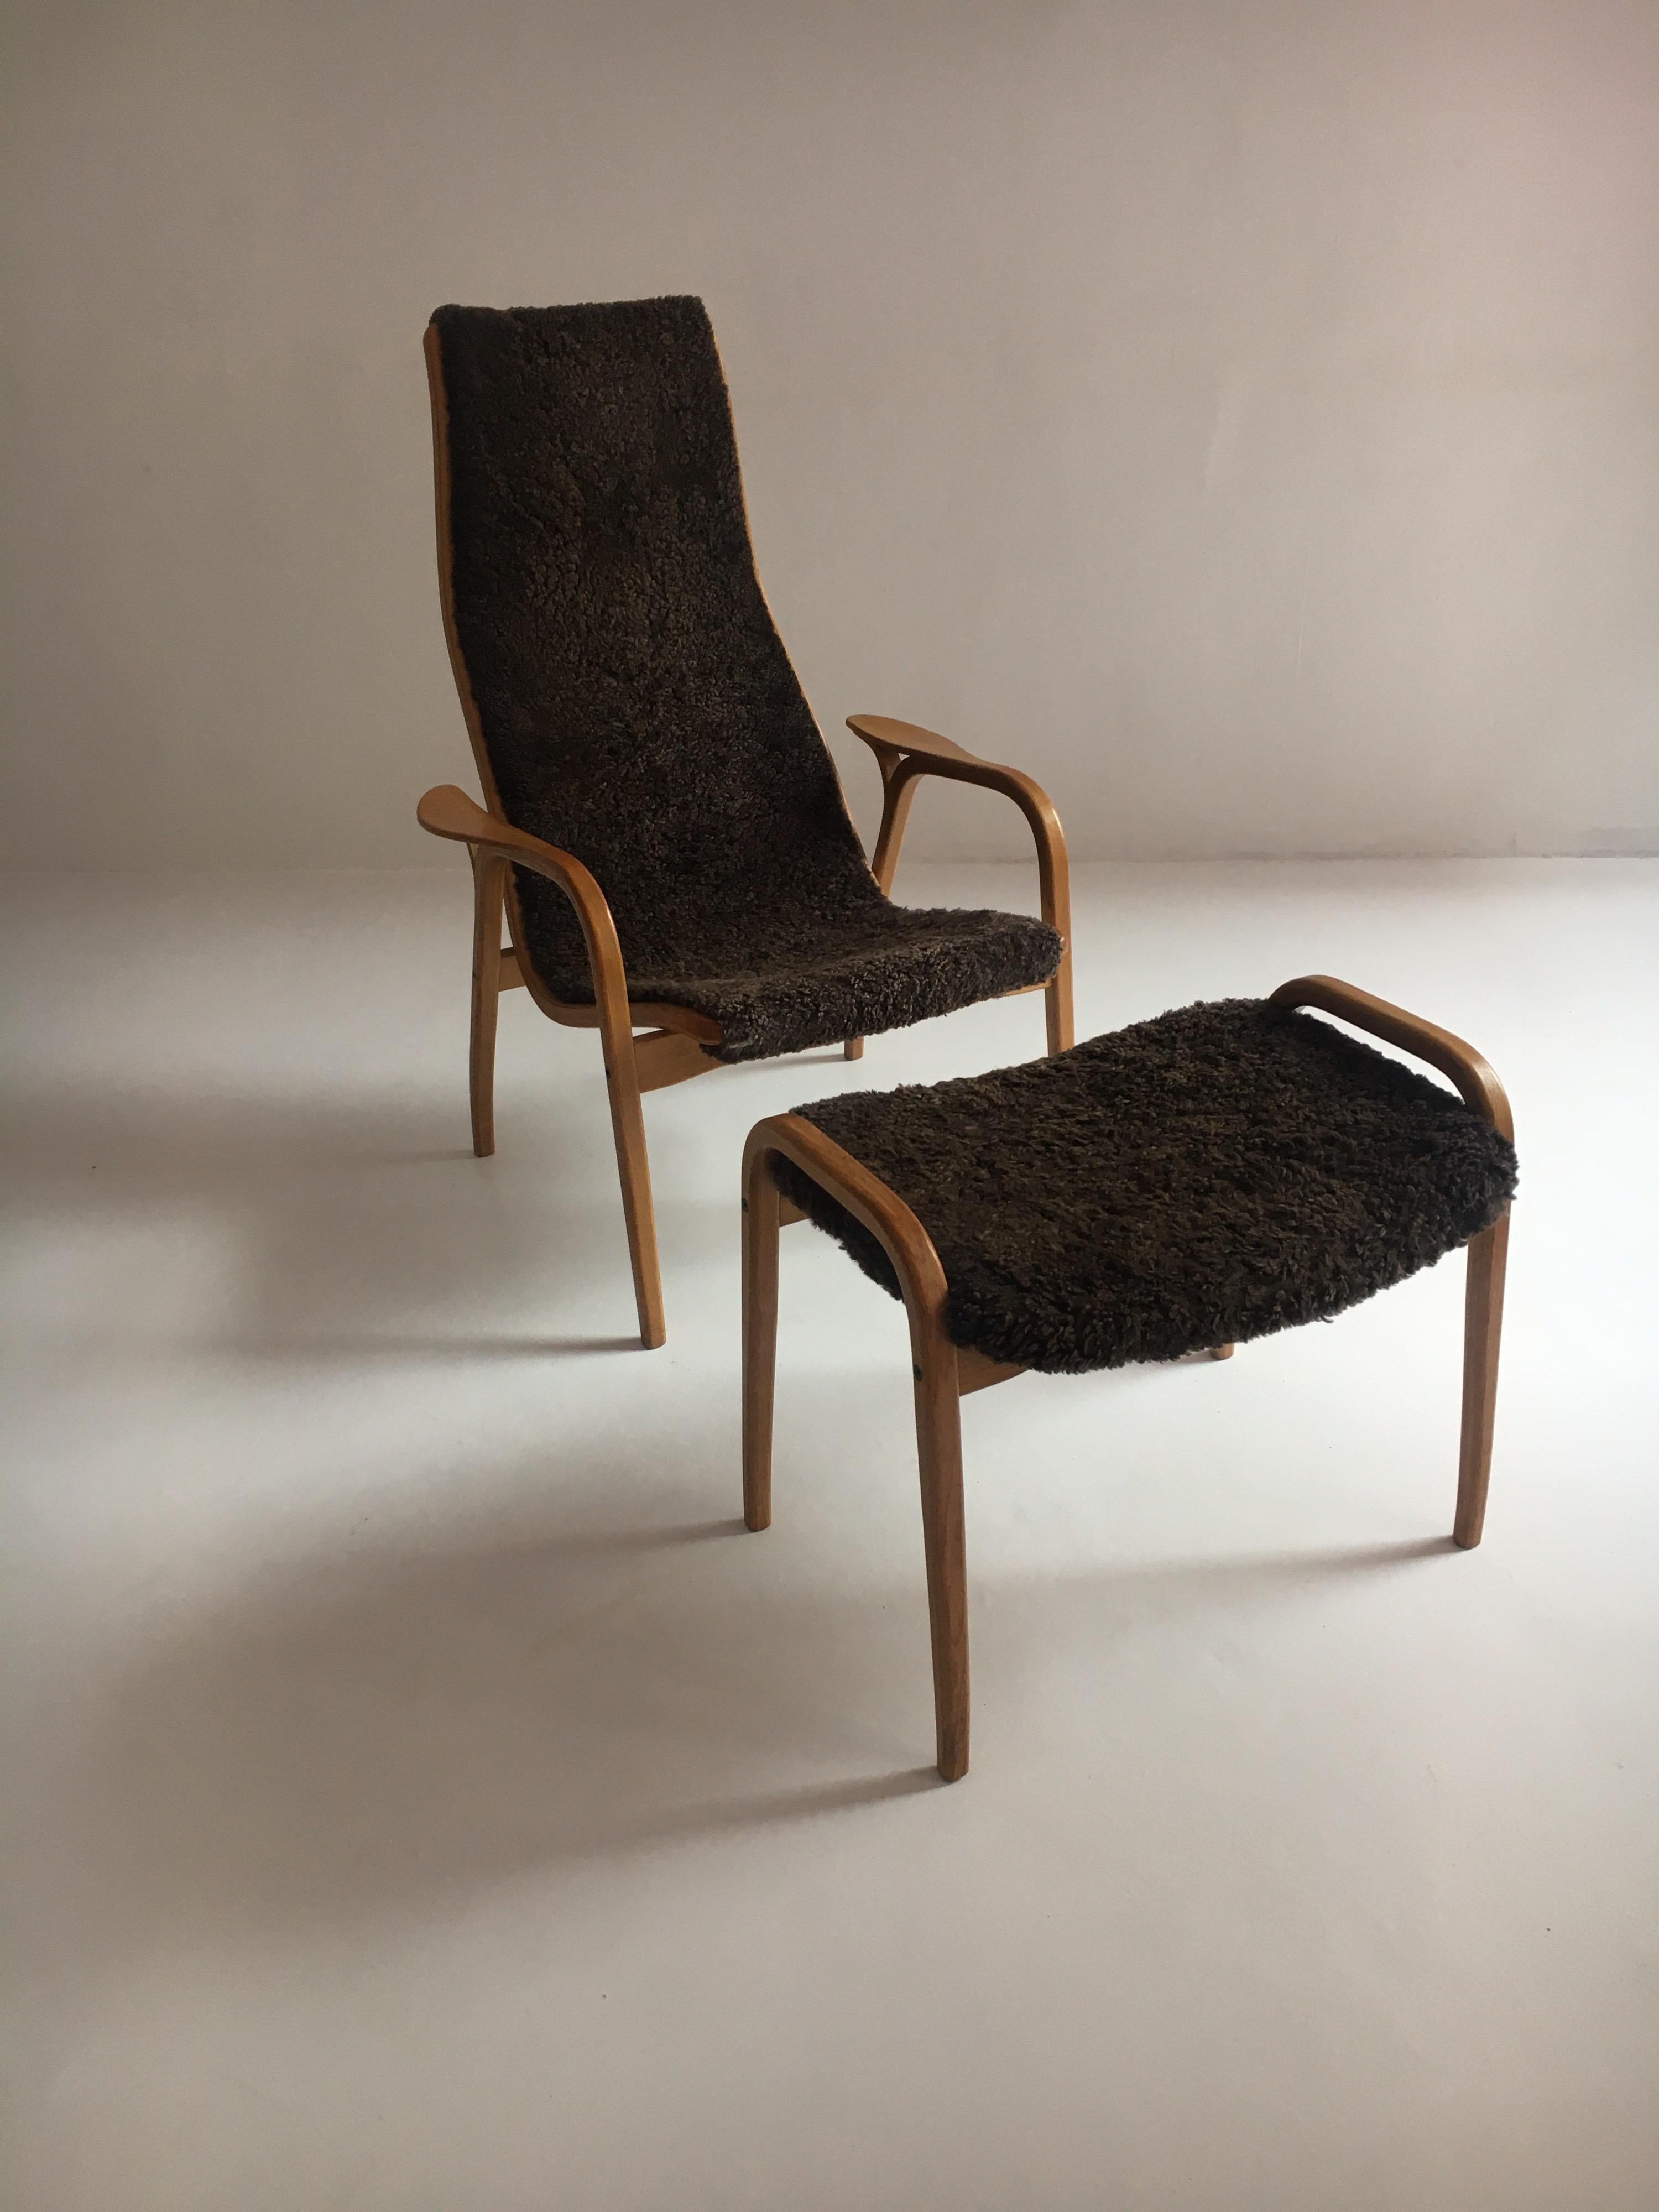 Swedese Yngve Ekström Lamino sheepskin easy chair with ottoman, Sweden, 1960s.